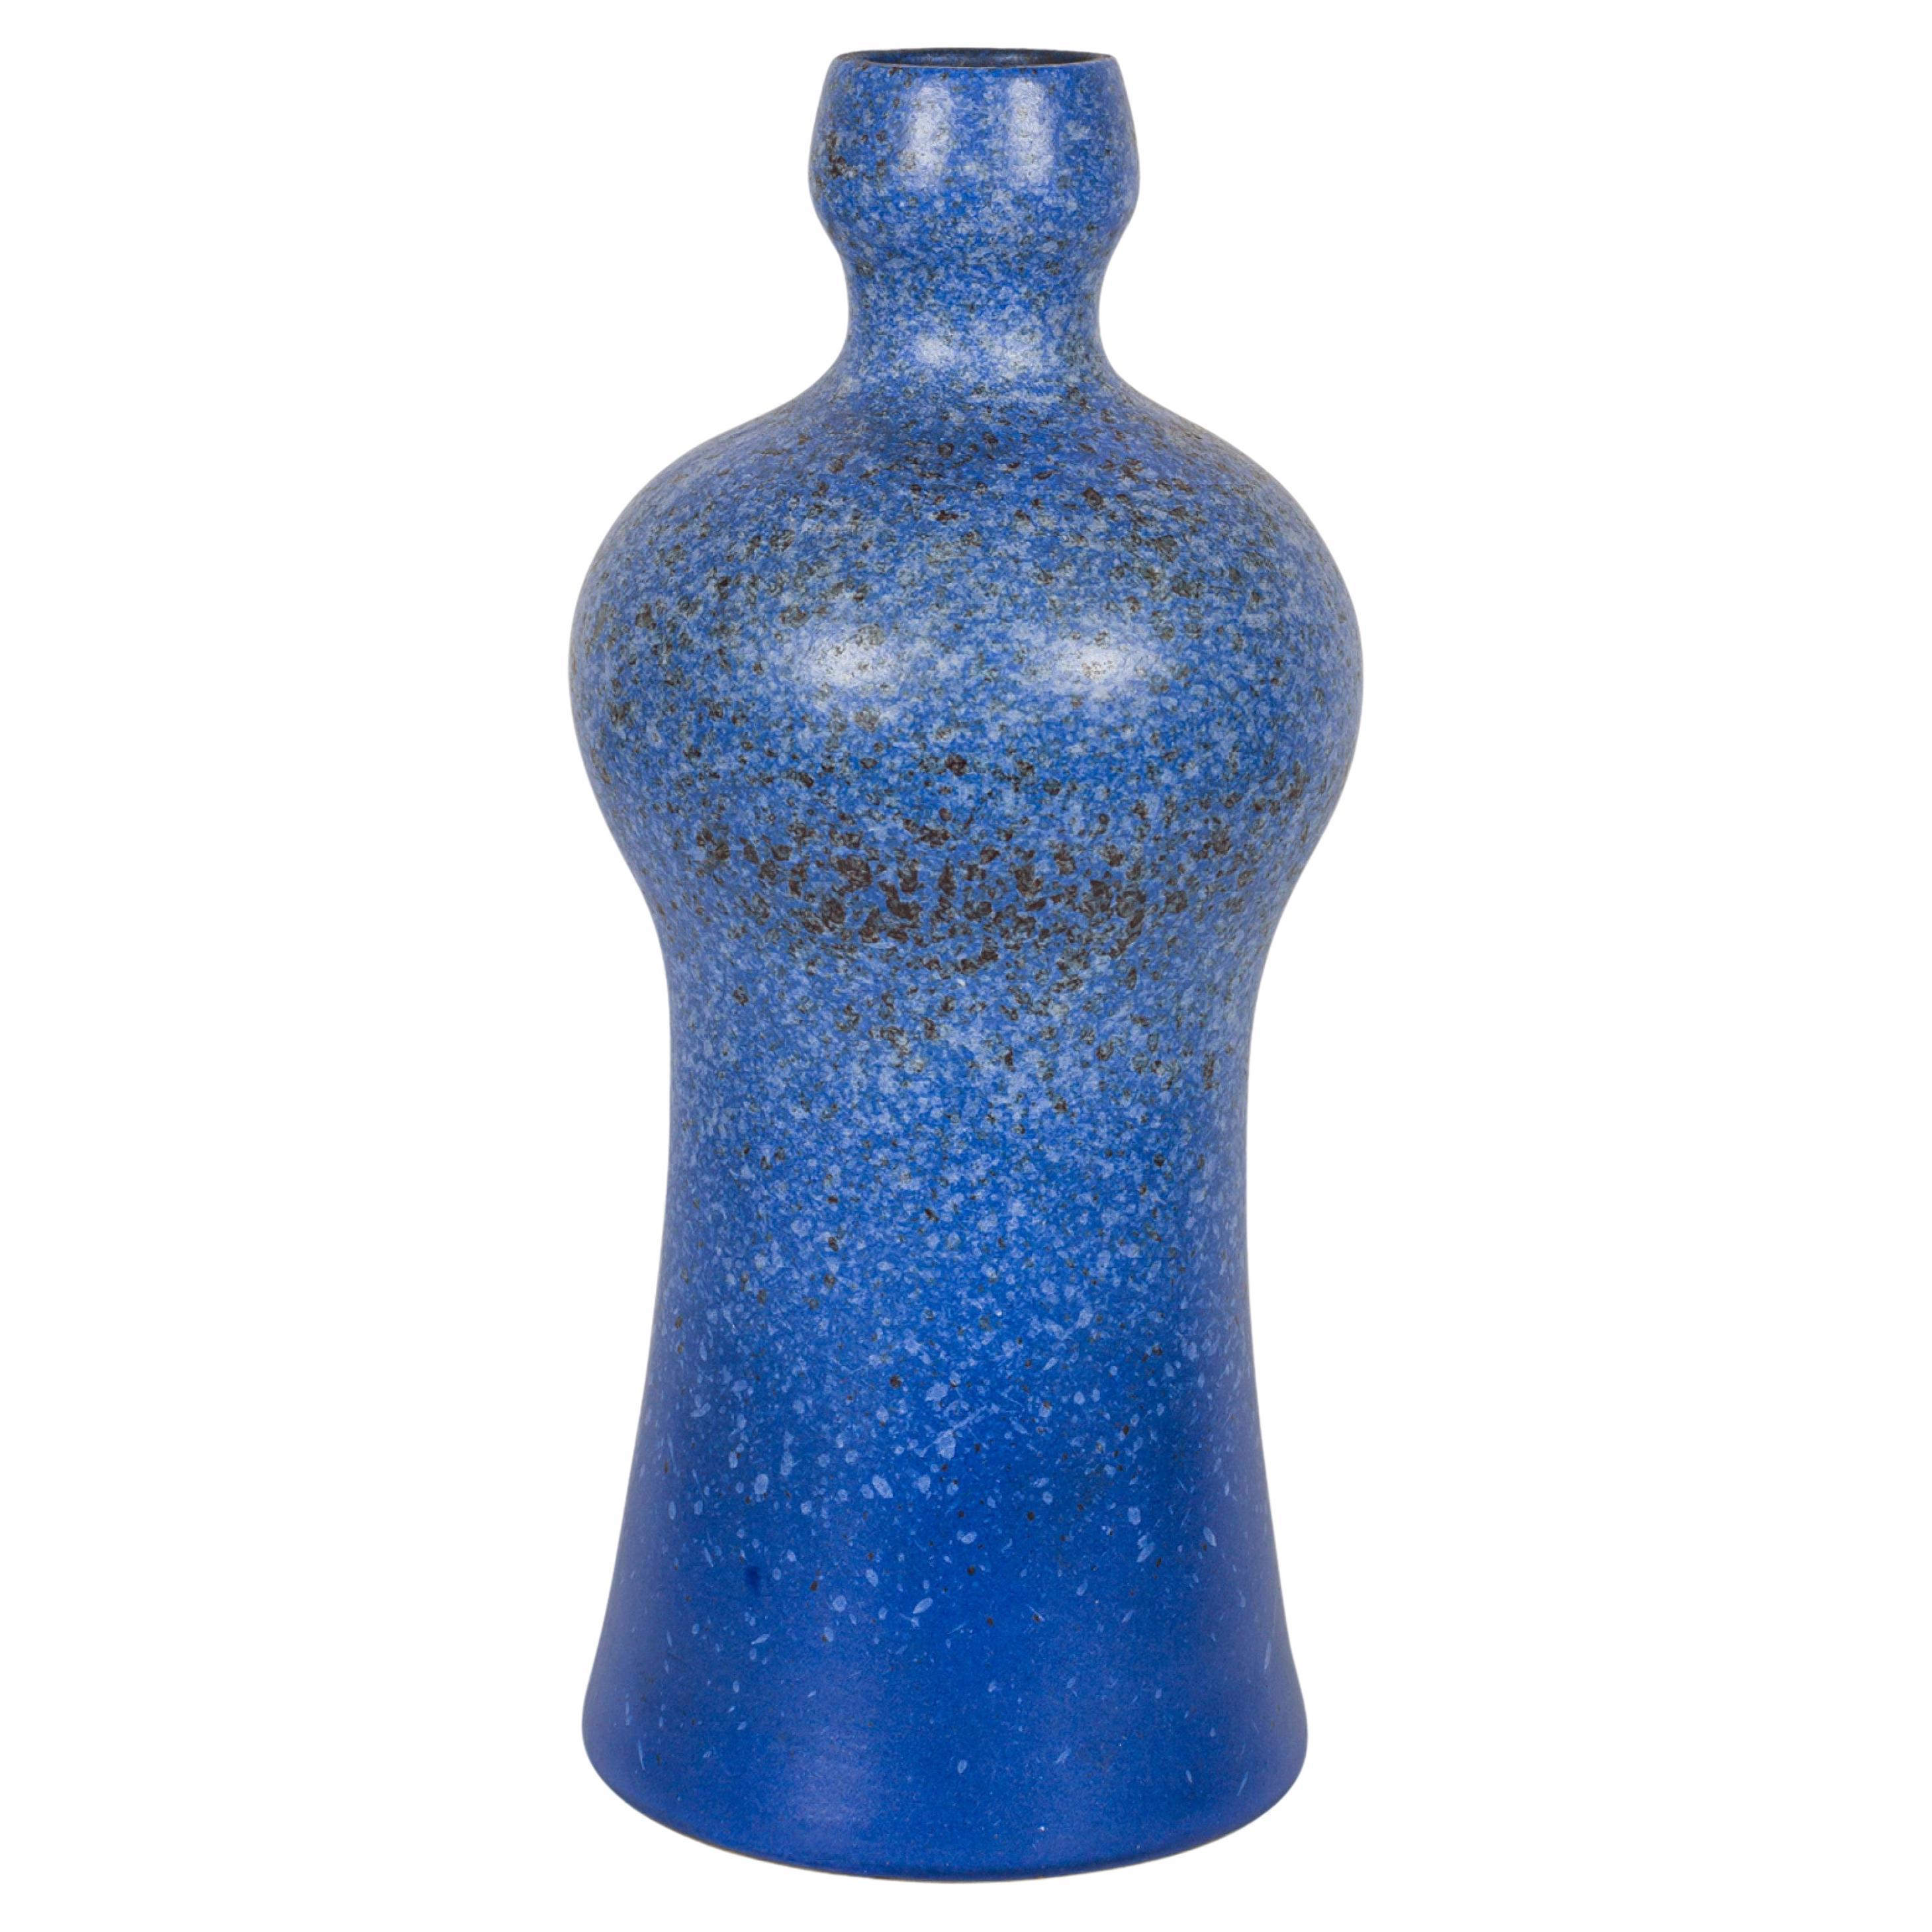 Strehla Keramik Ostdeutsche Mid-Century-Vase aus blau glasierter Keramik mit gesprenkelter Keramikvase